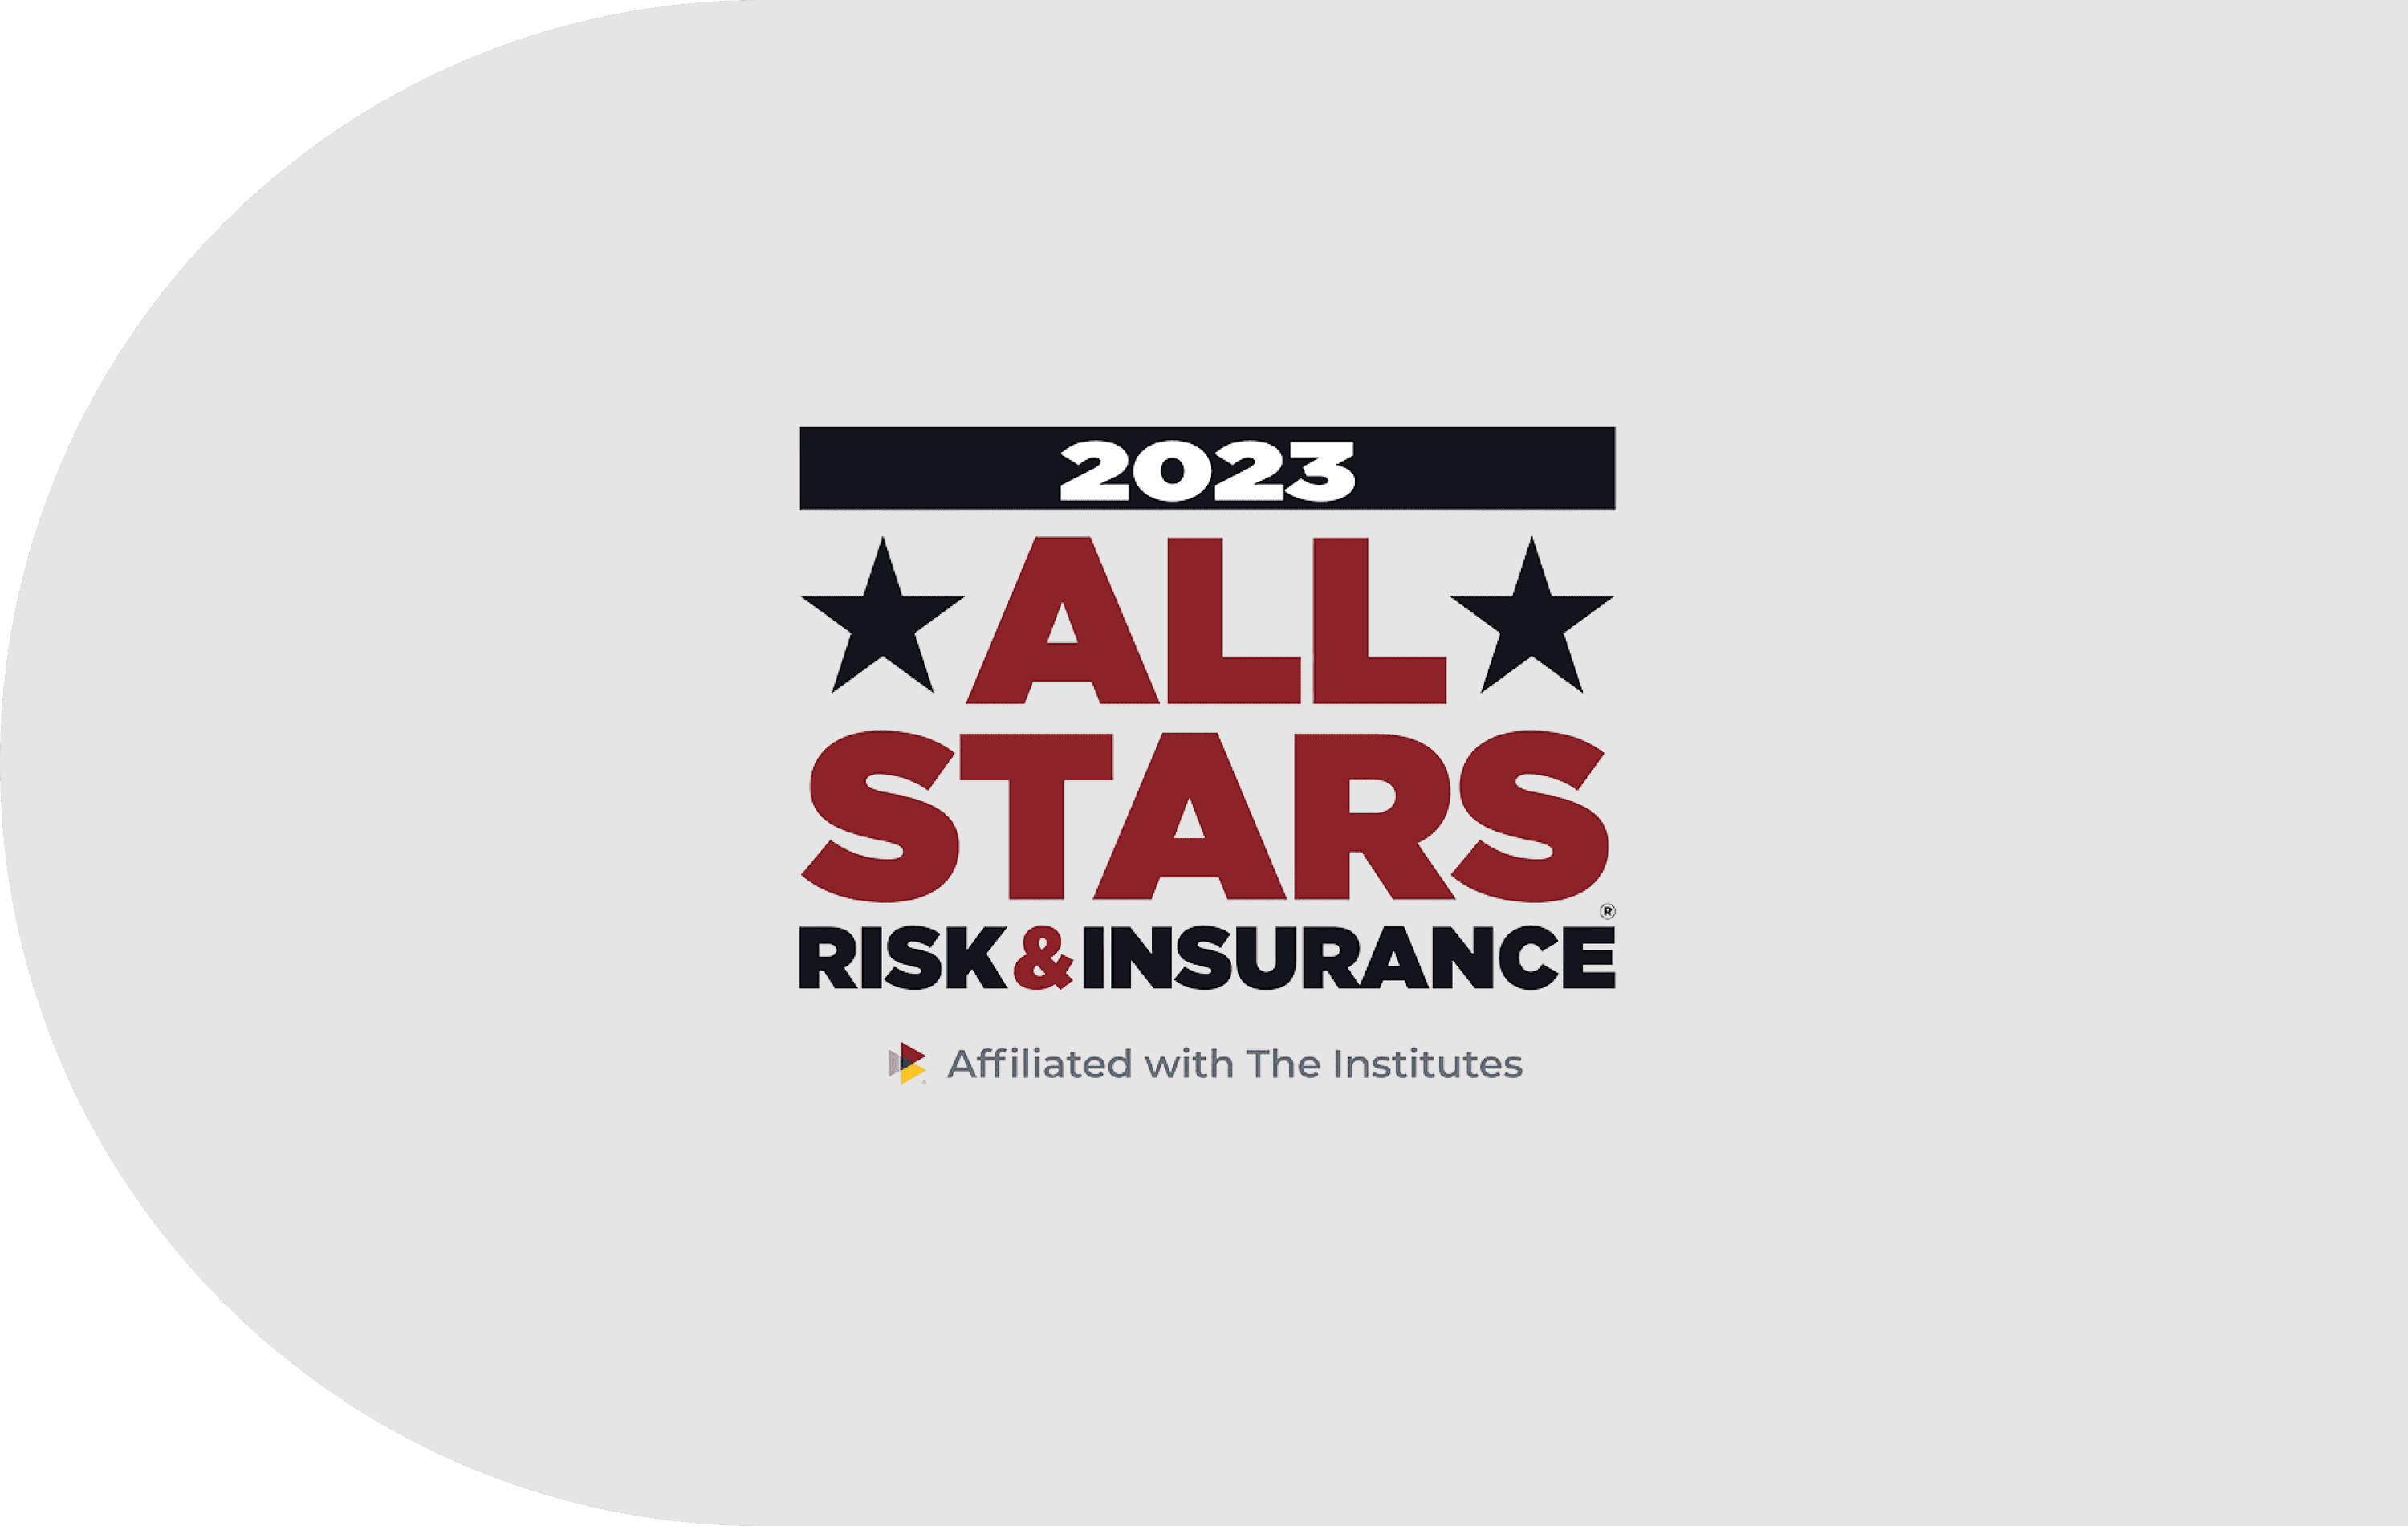 Risk & Insurance 2023 All Stars Awards